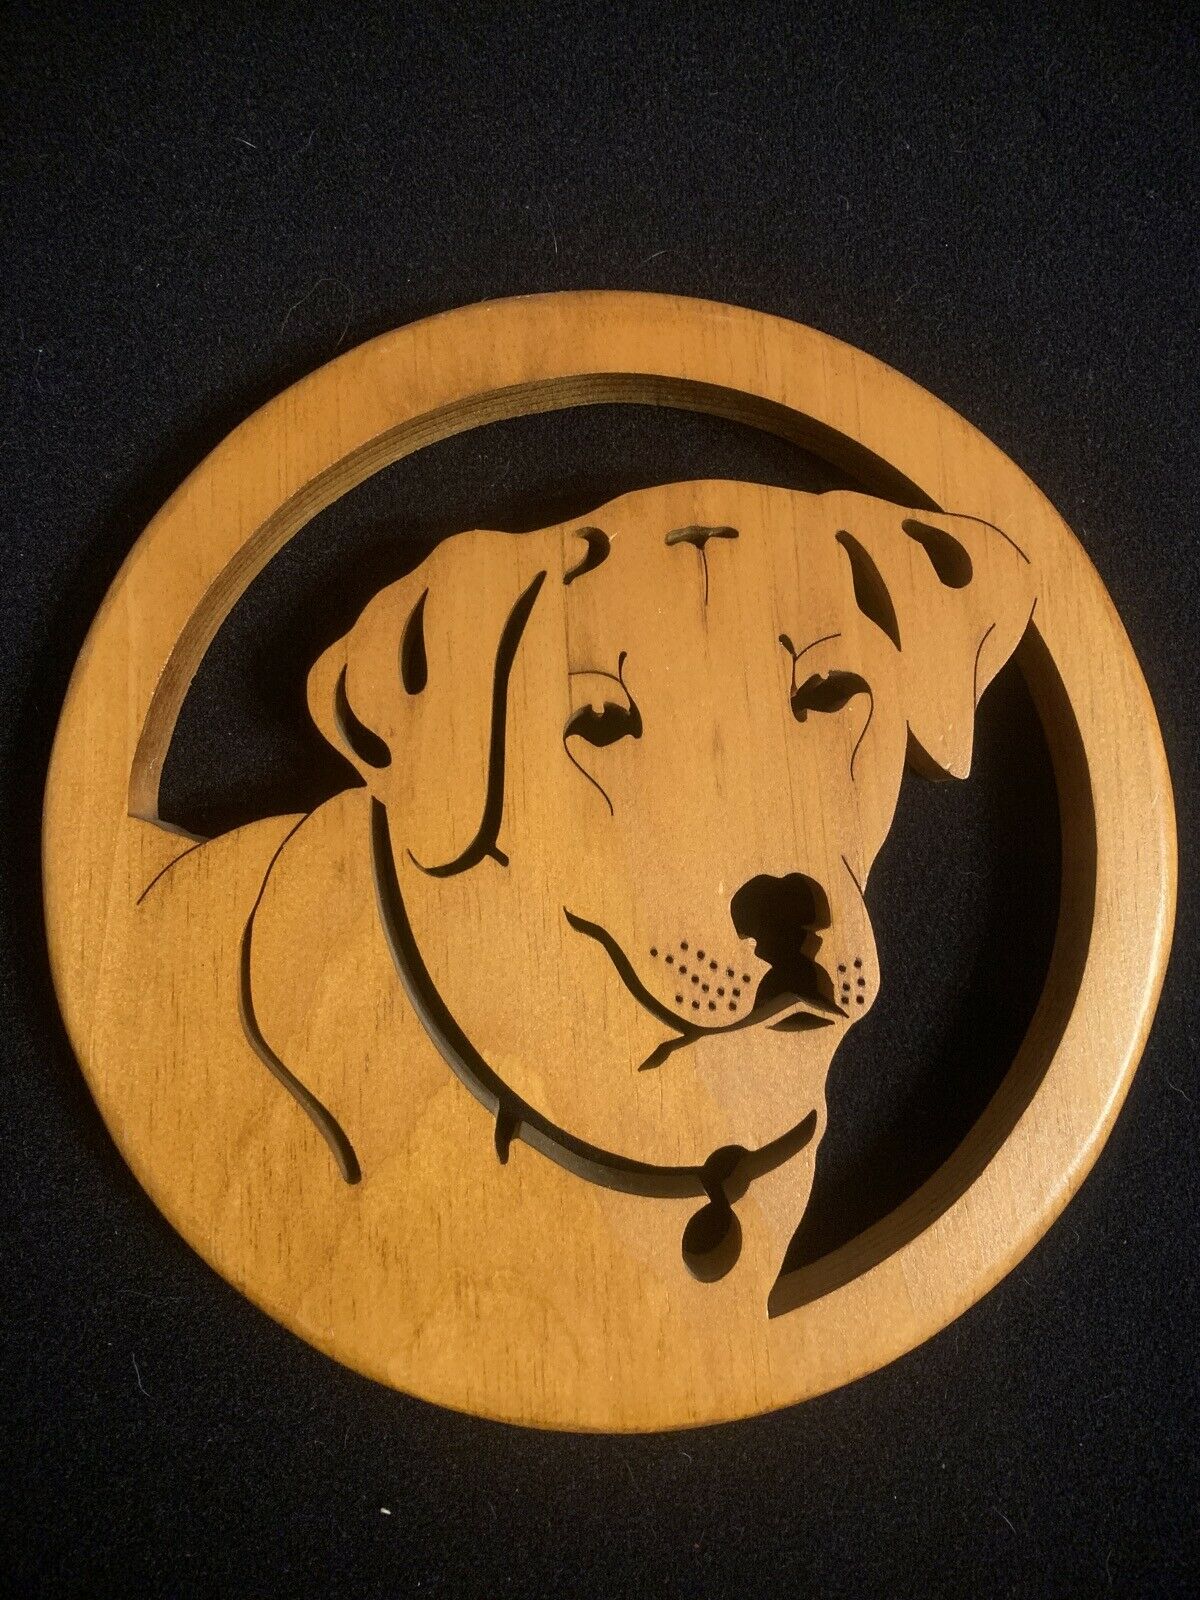 Labrador Retriever Dog Wooden Cut Out Decorative Wall Plaque